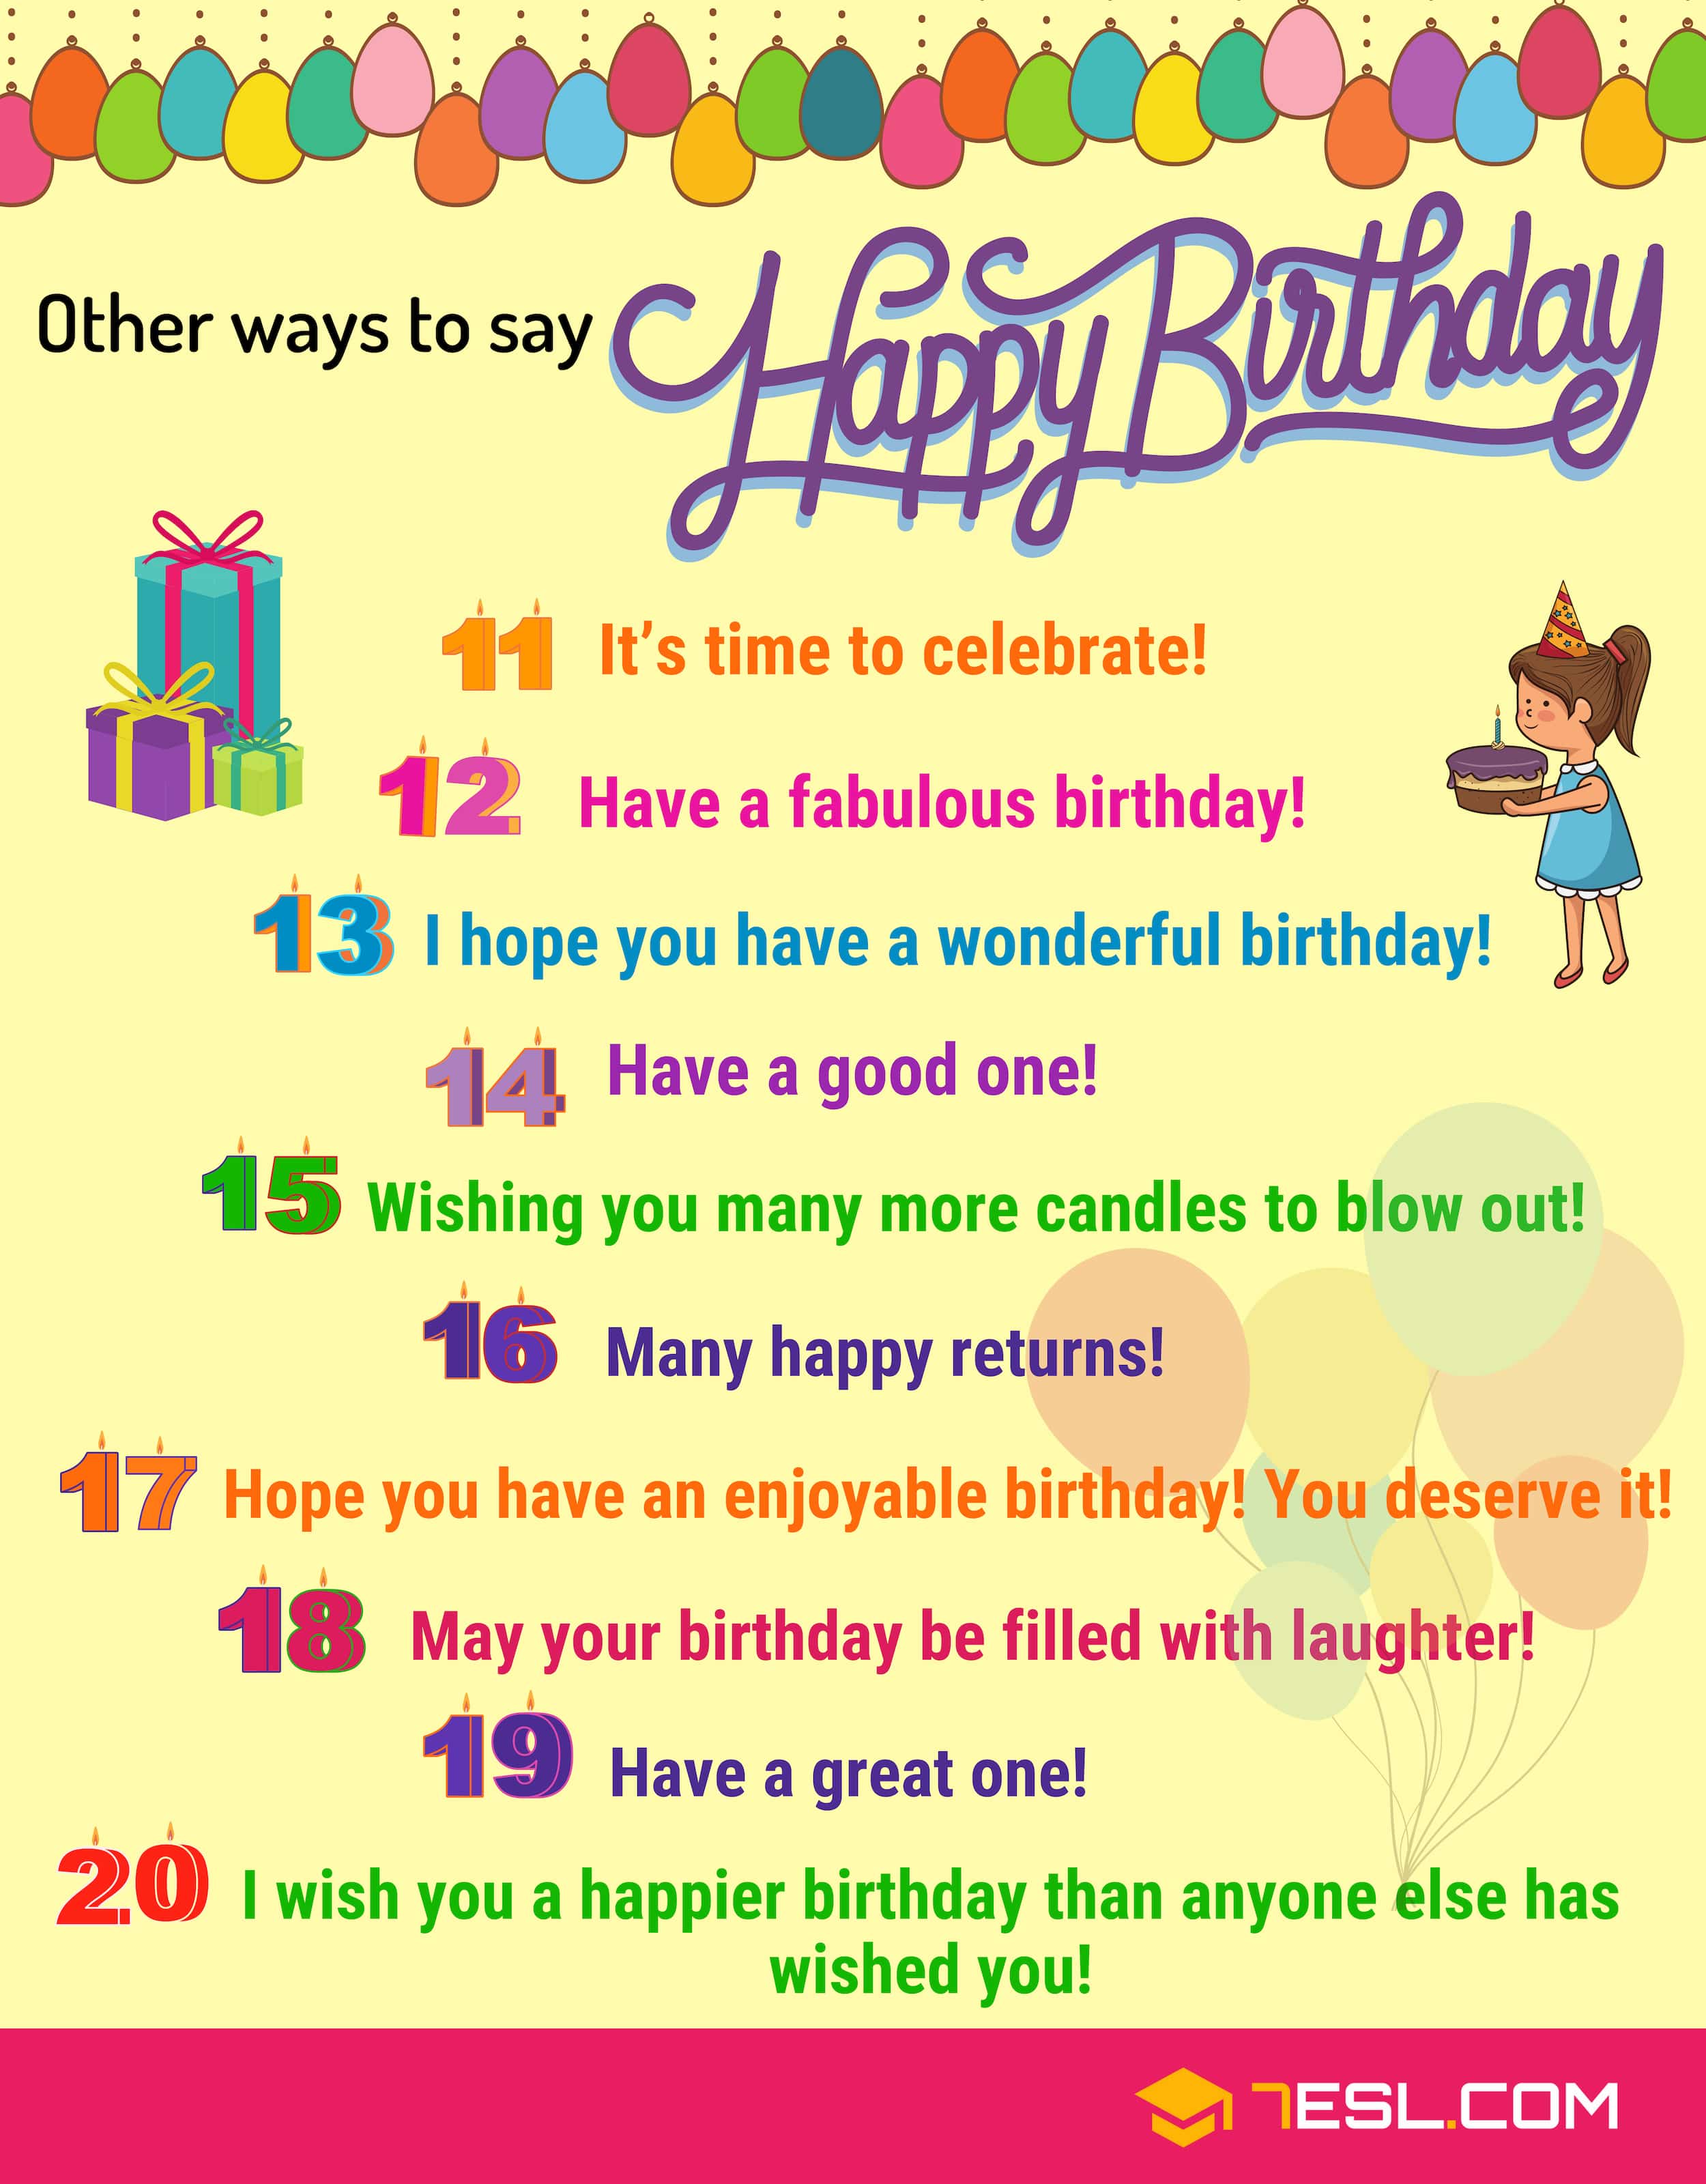 25+ Ways to Say HAPPY BIRTHDAY! in English